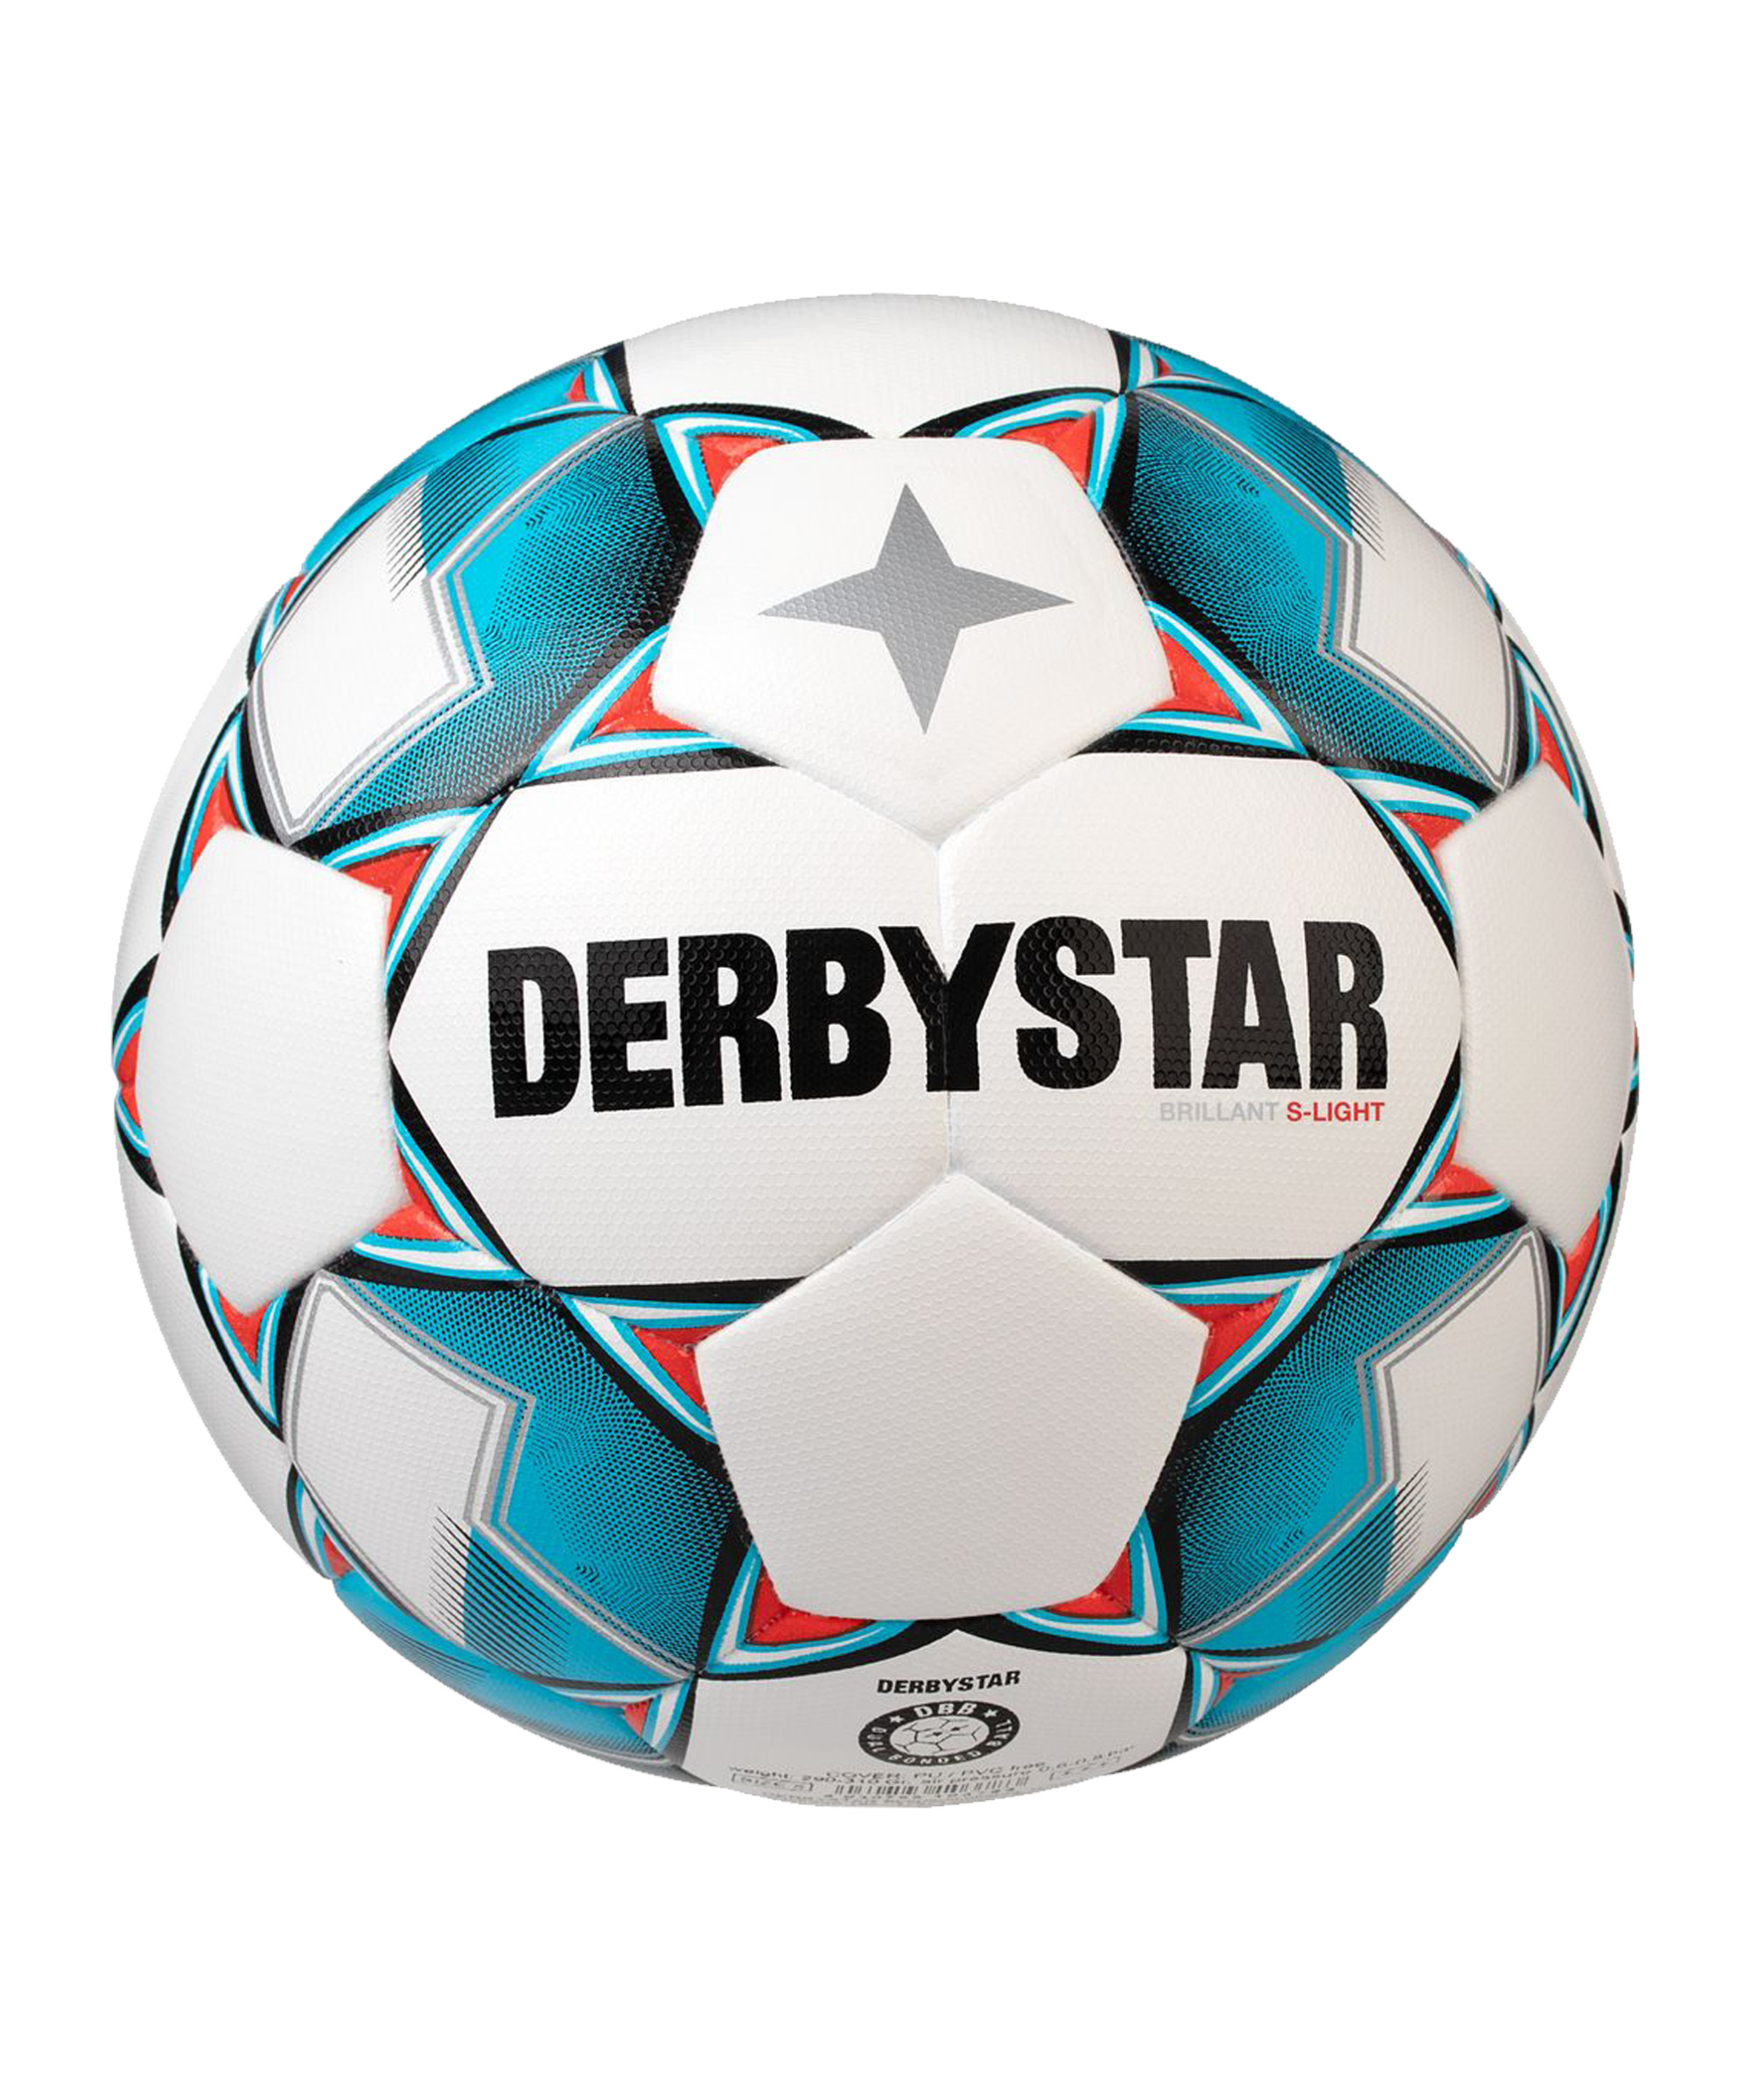 Derbystar Bundesliga Brillant Replica S-Light v21 Fußball weiß orange NEU 